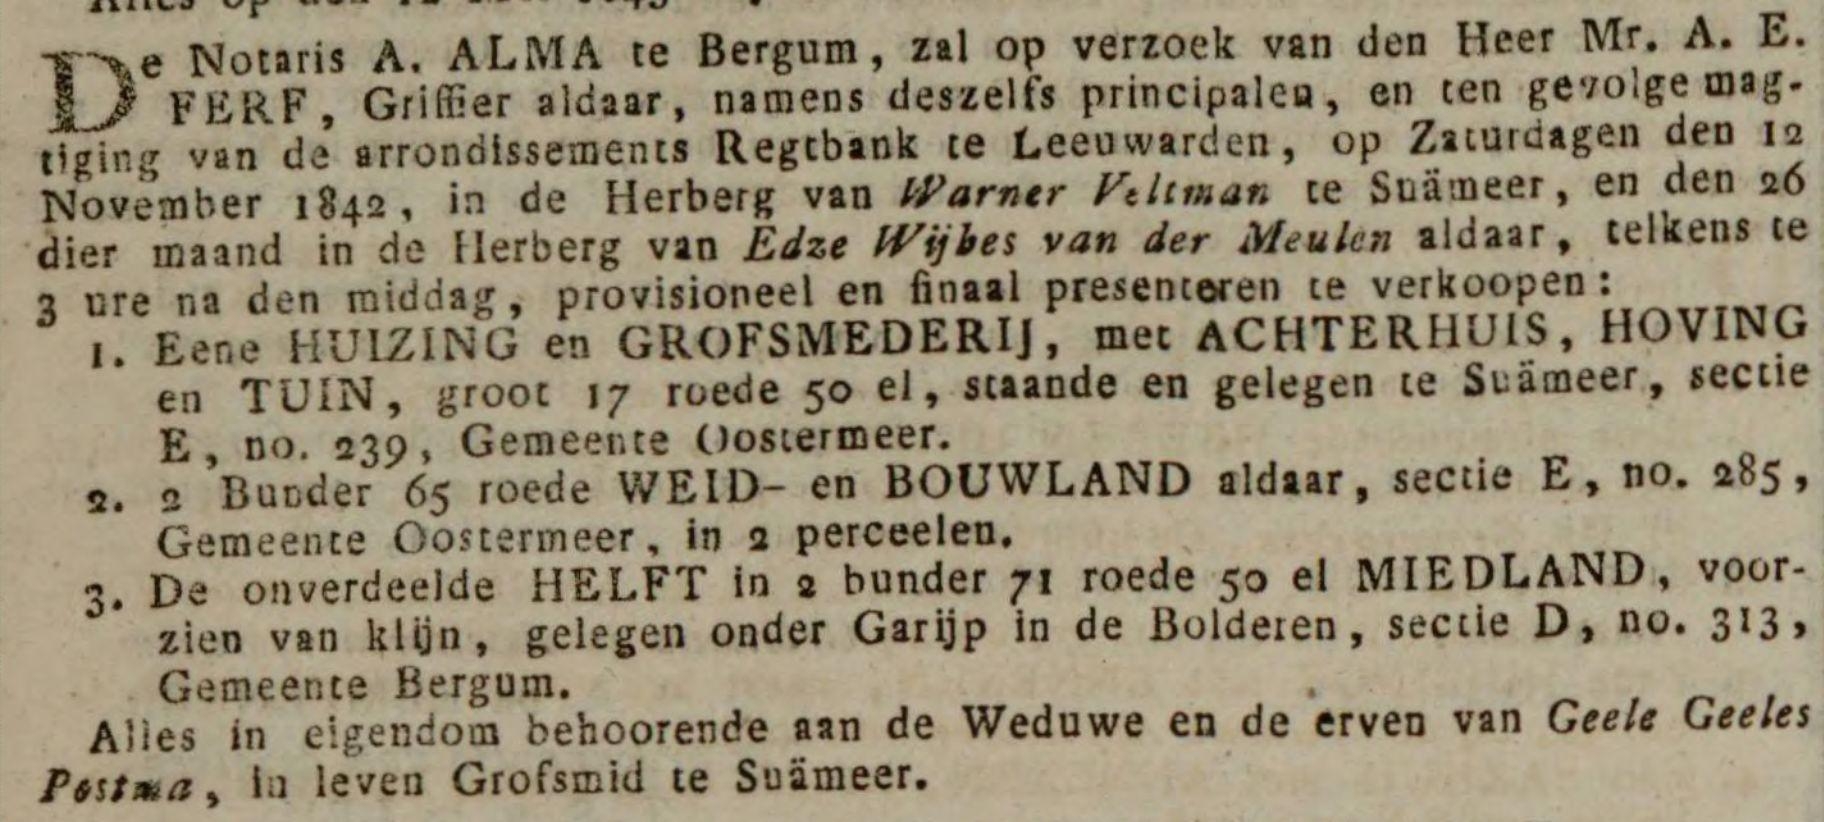 Leeuwarder Courant 11-11-1842